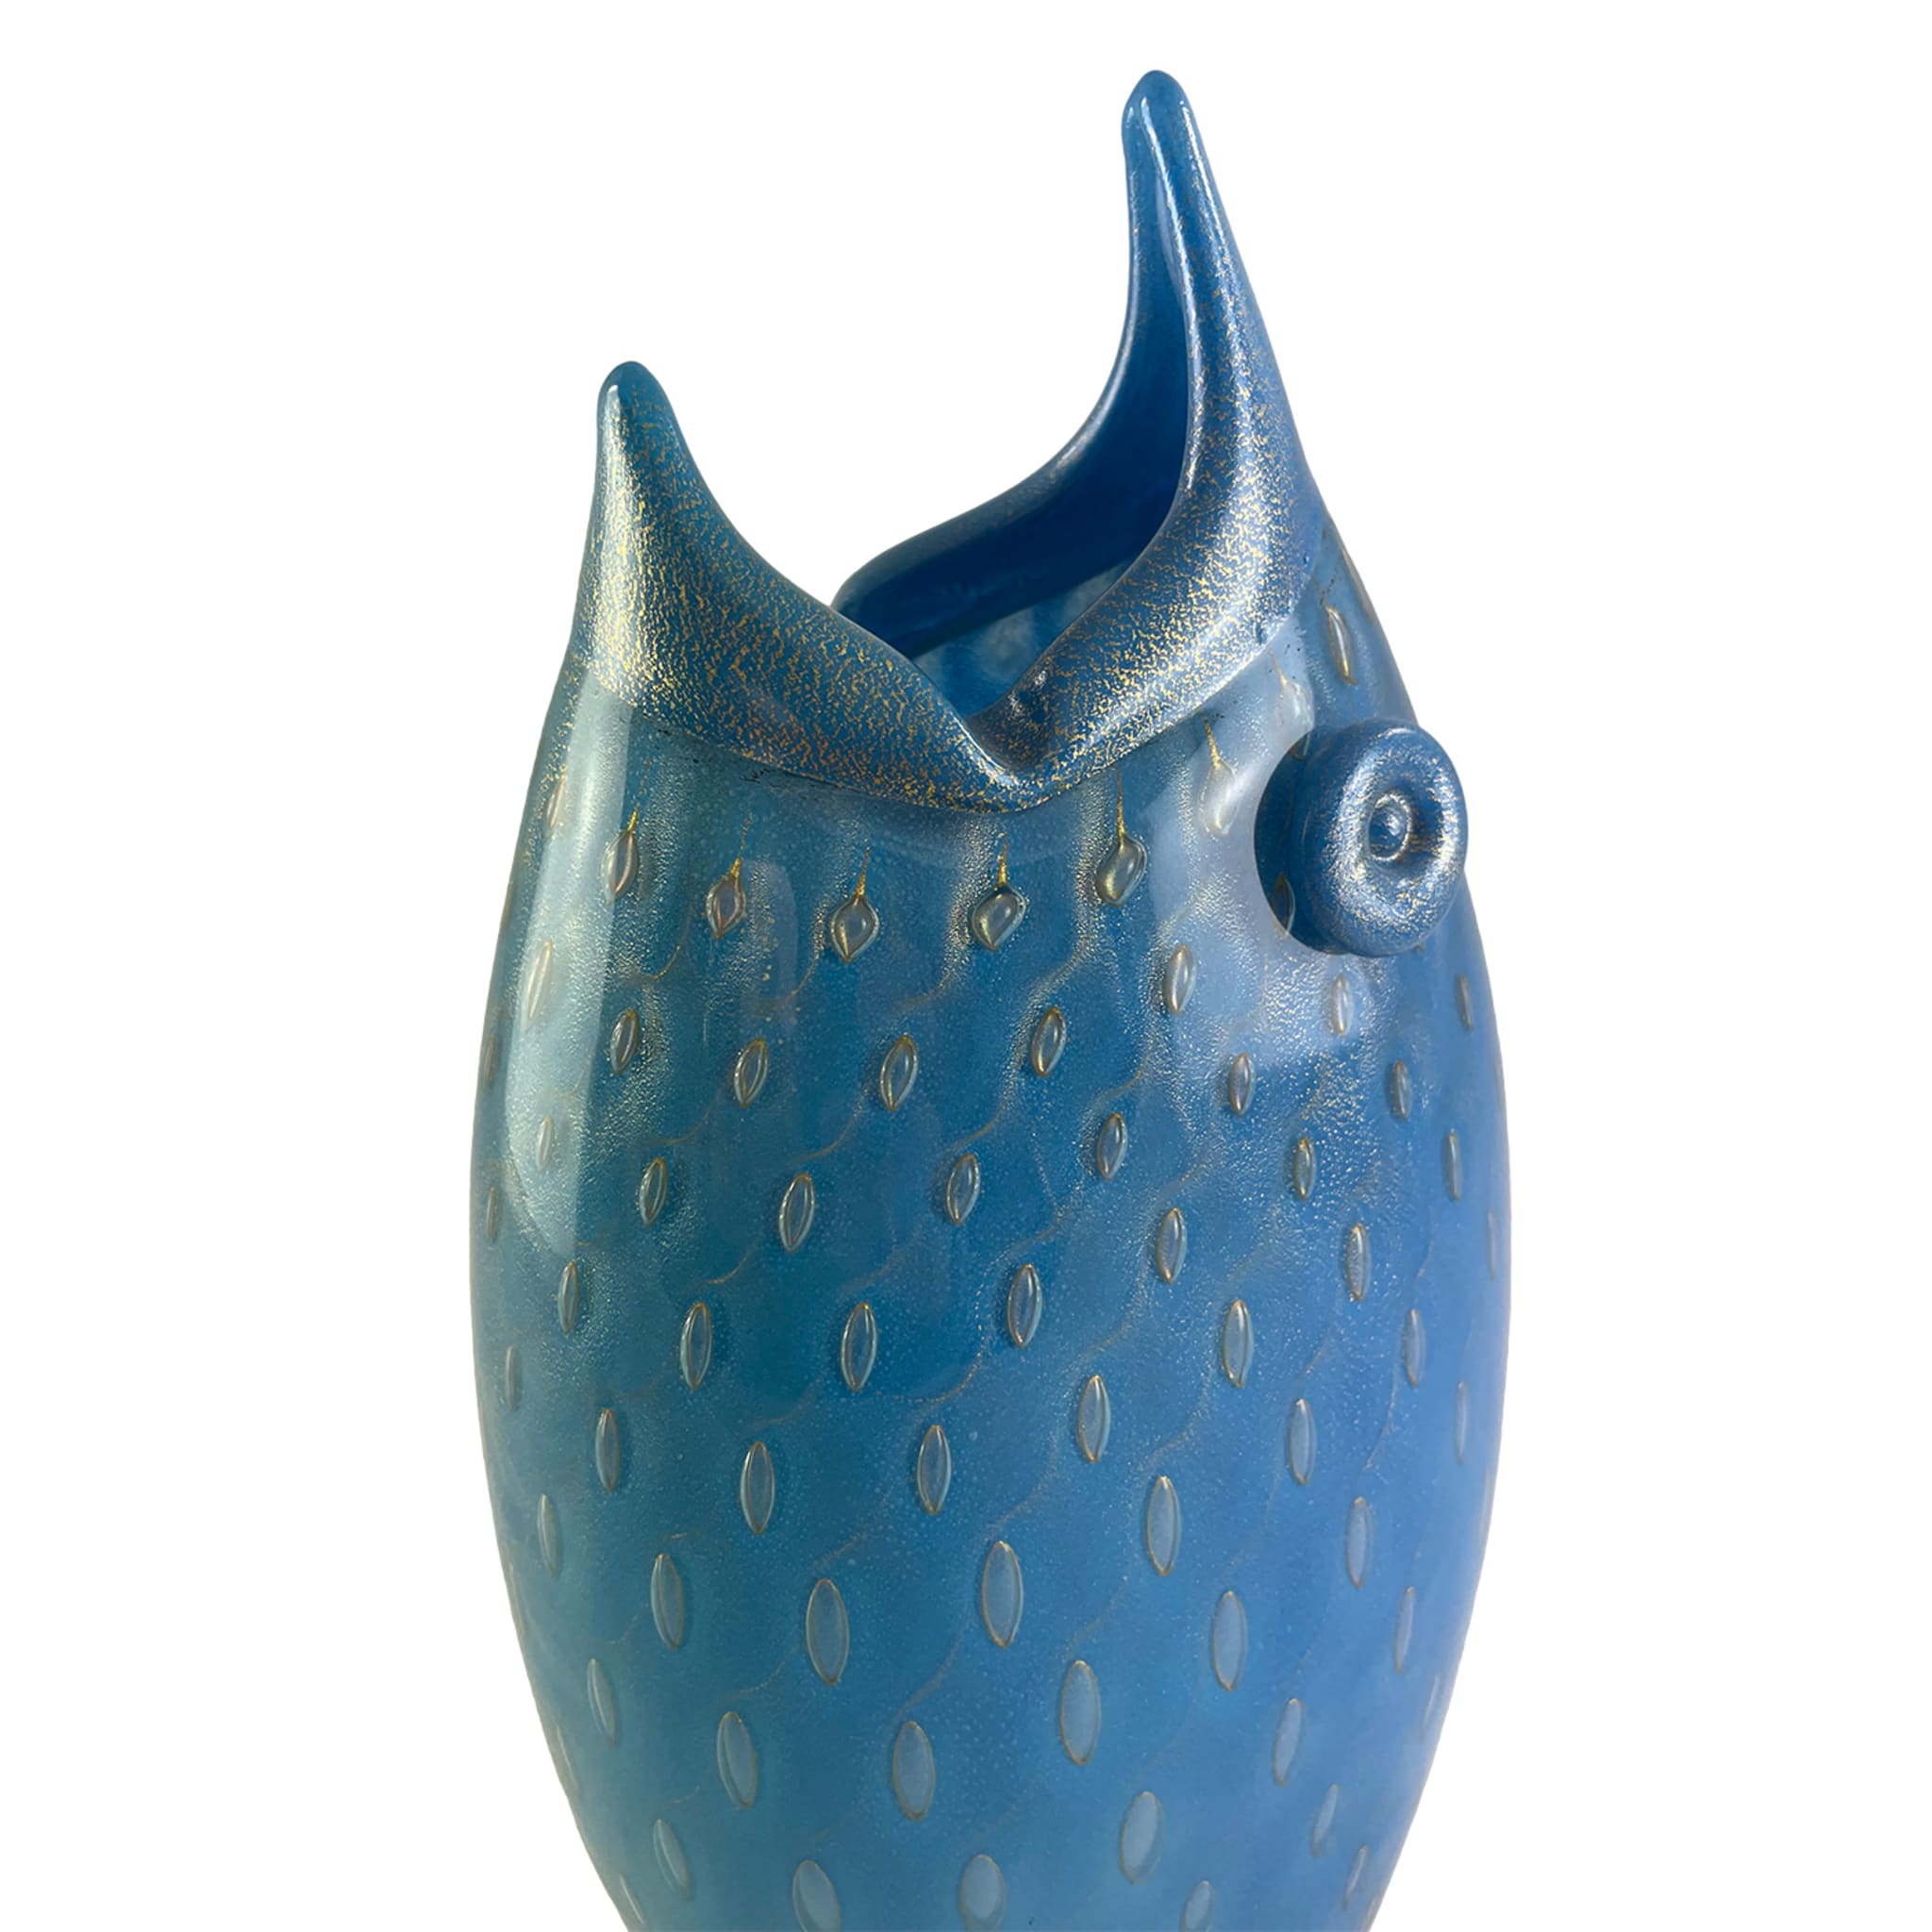 Pesce Zoomorphic Blue Glass Vase - Alternative view 1